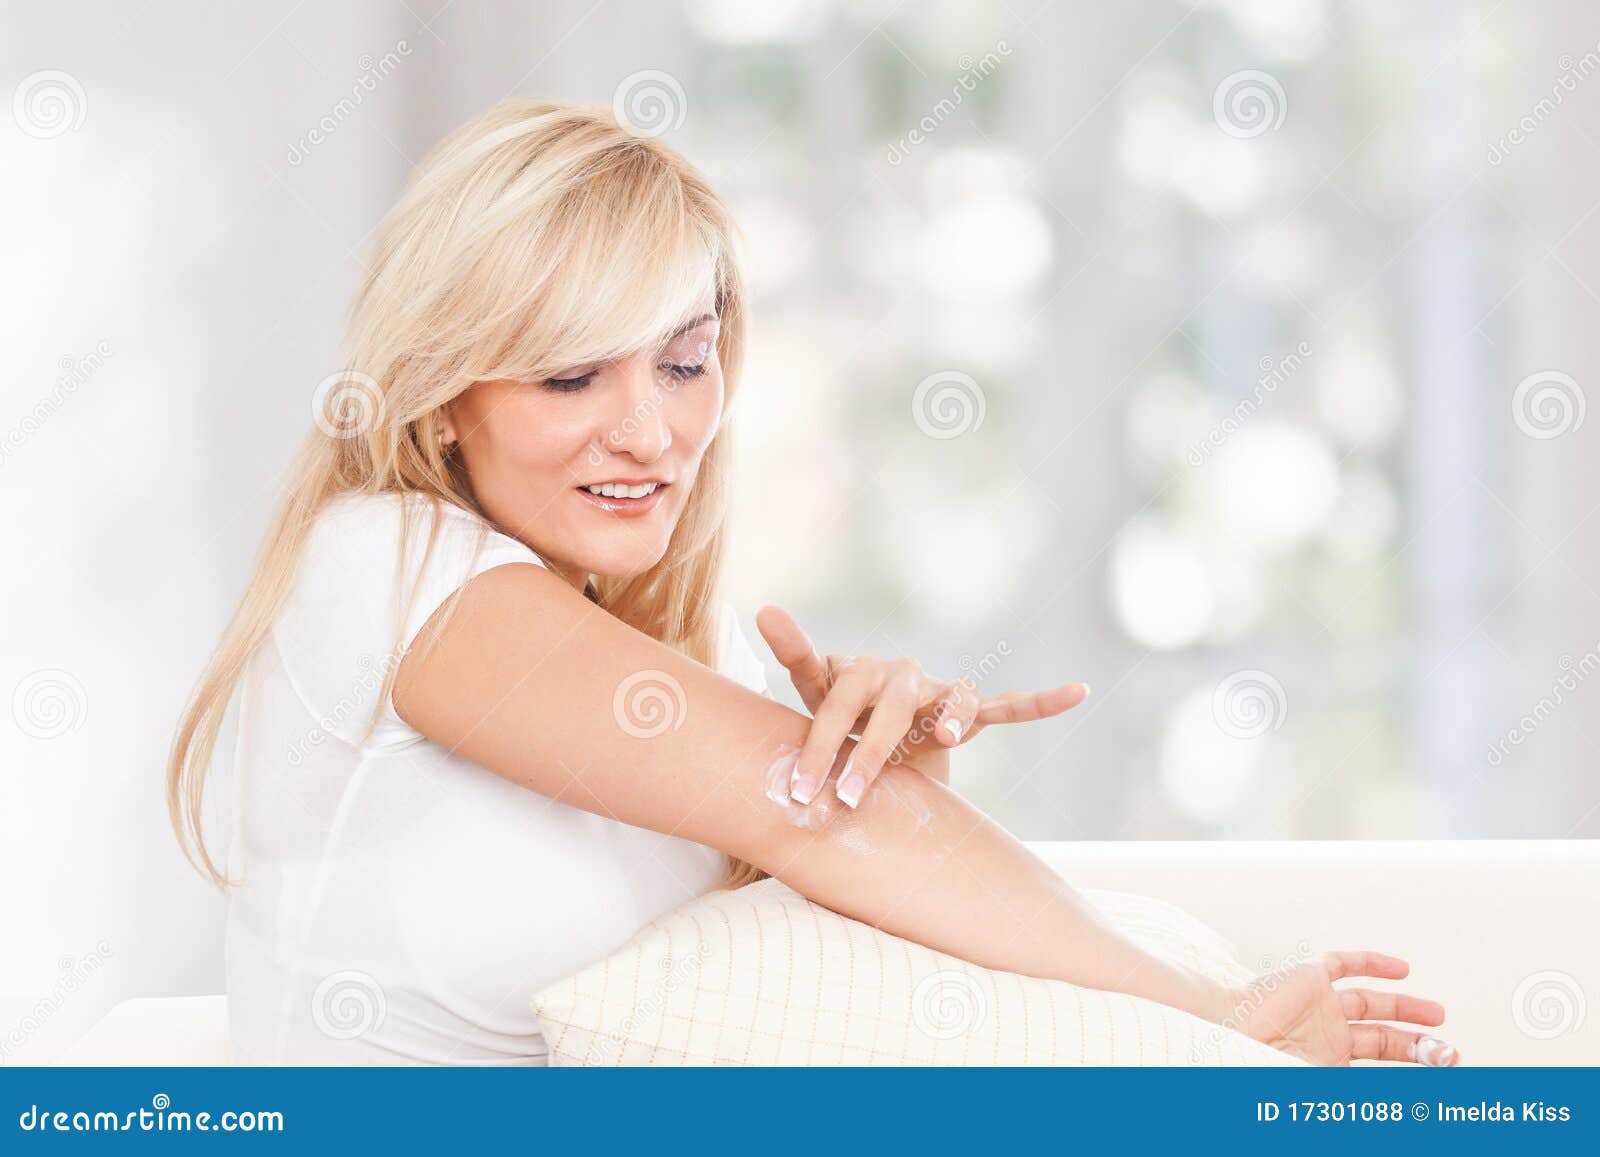 beauty woman using moisturising cream